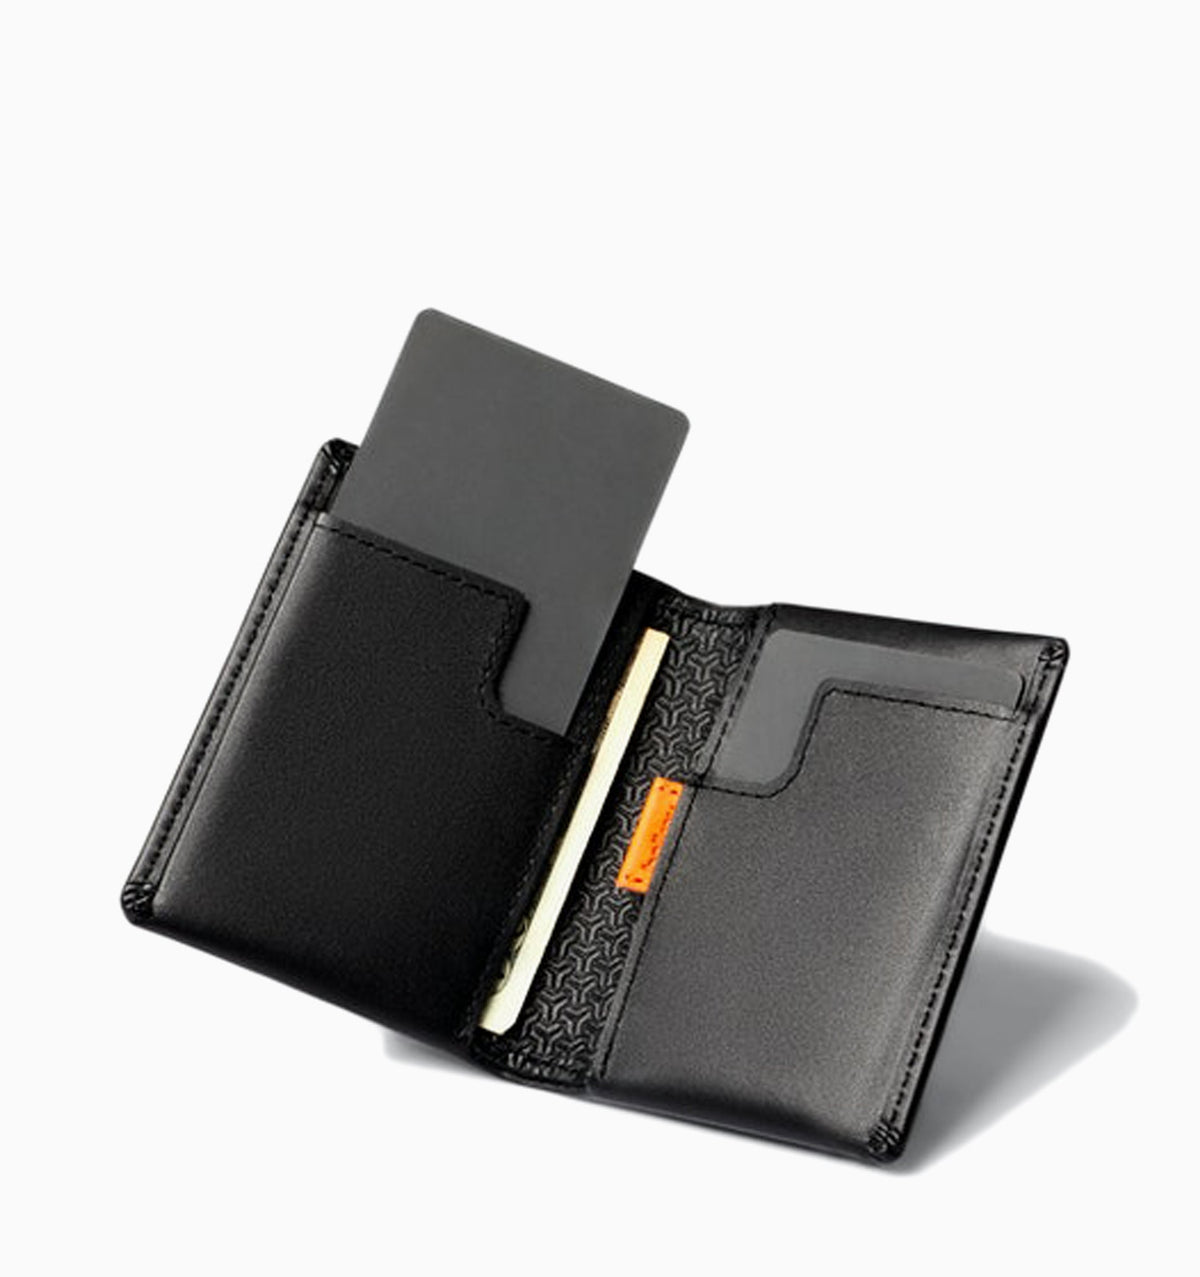 Bellroy Slim Sleeve Wallet Carryology Essentials Edition